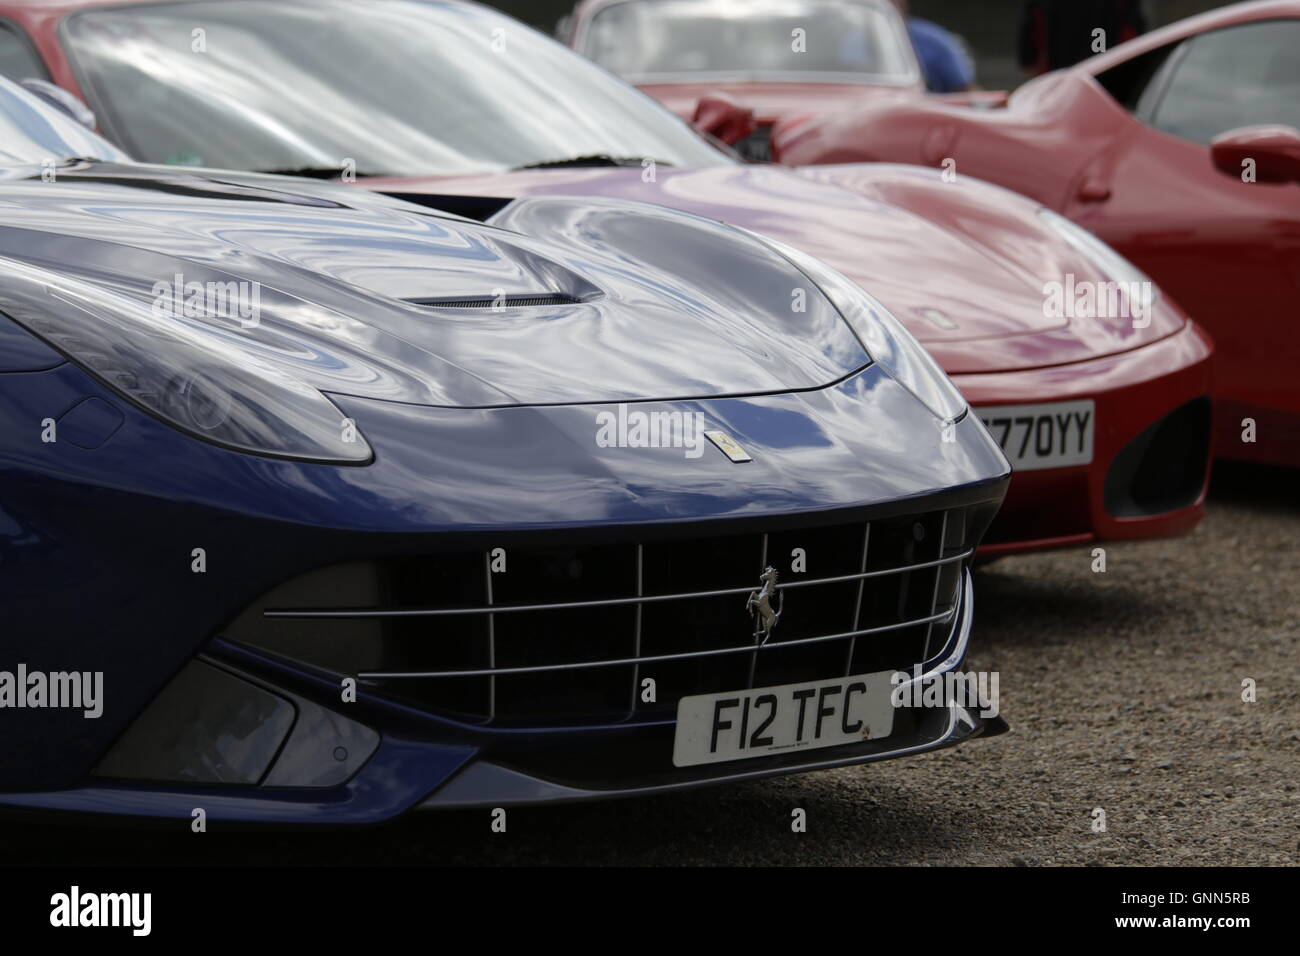 Ferrari cars at Brands Hatch, UK Stock Photo